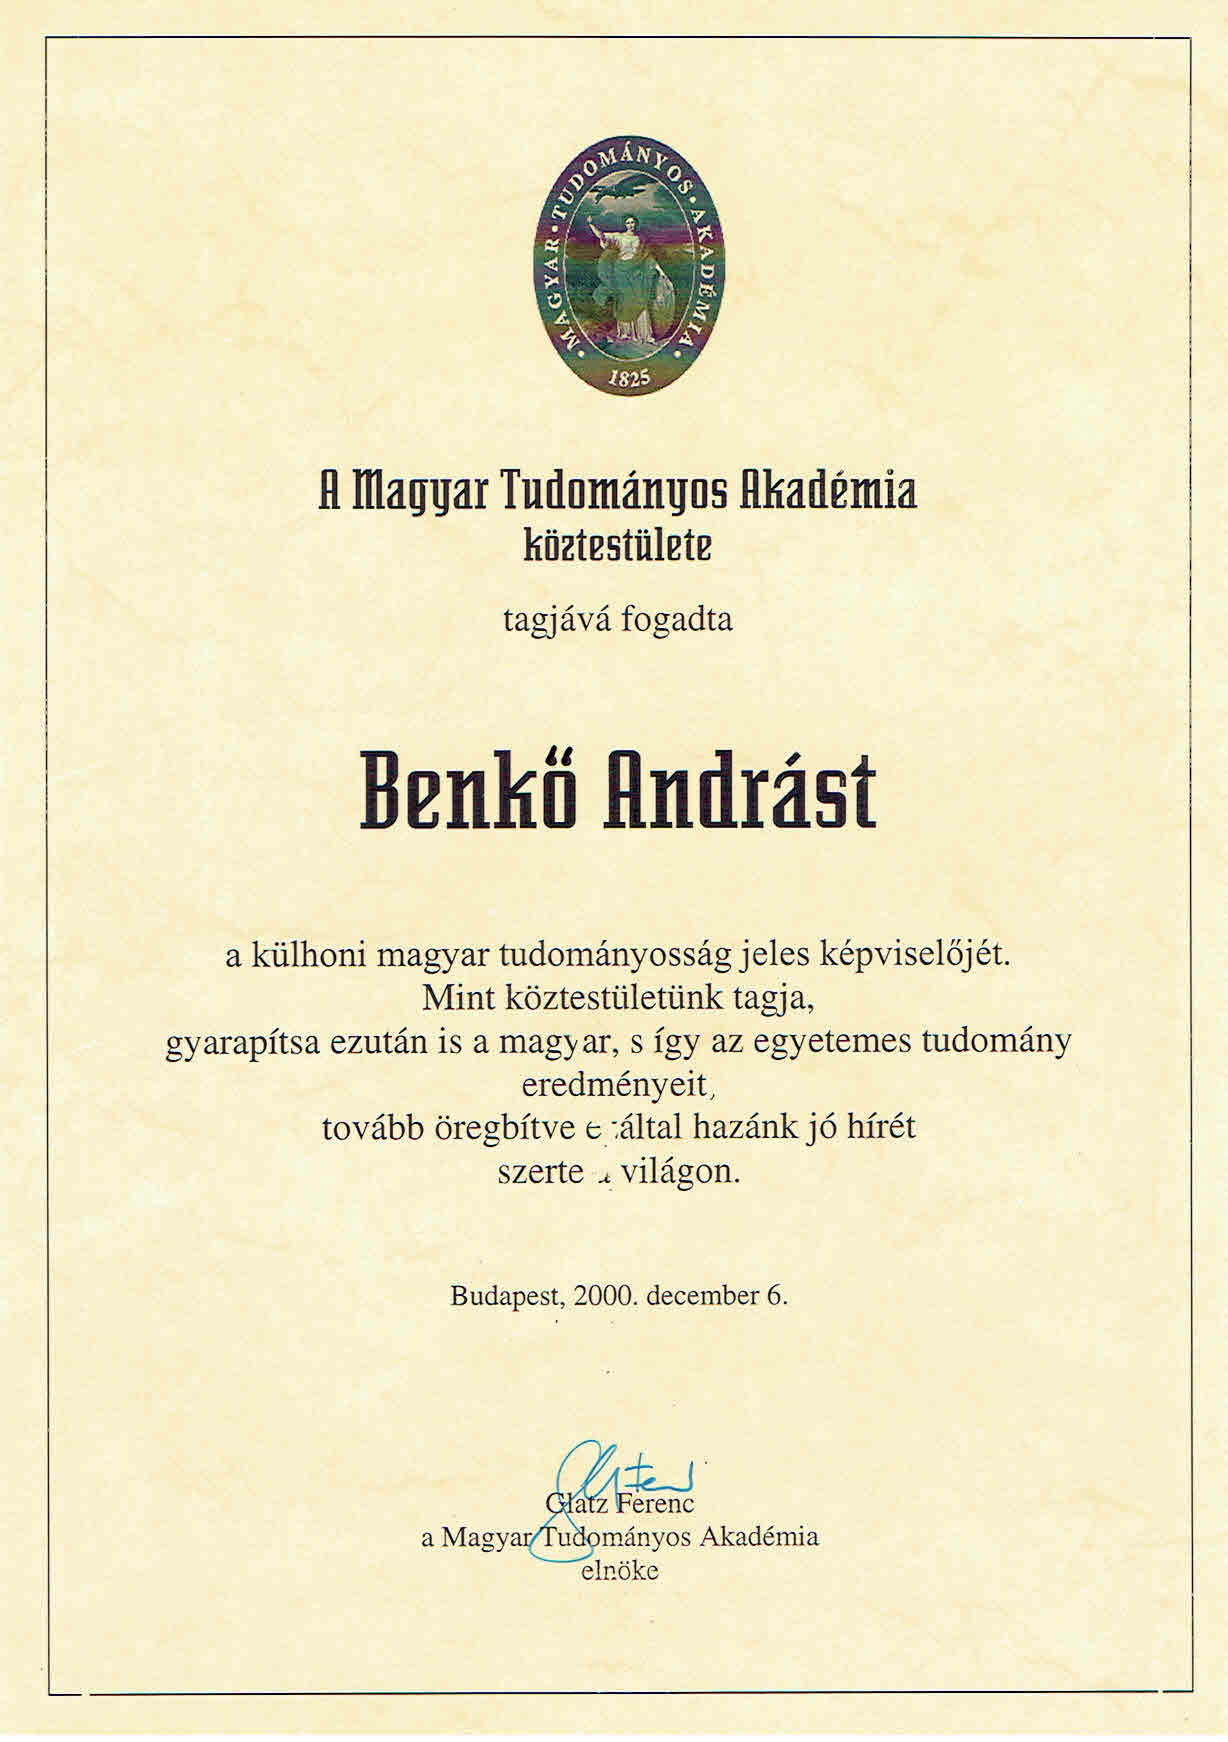 A Magyar Tudományos Akadémia tagja